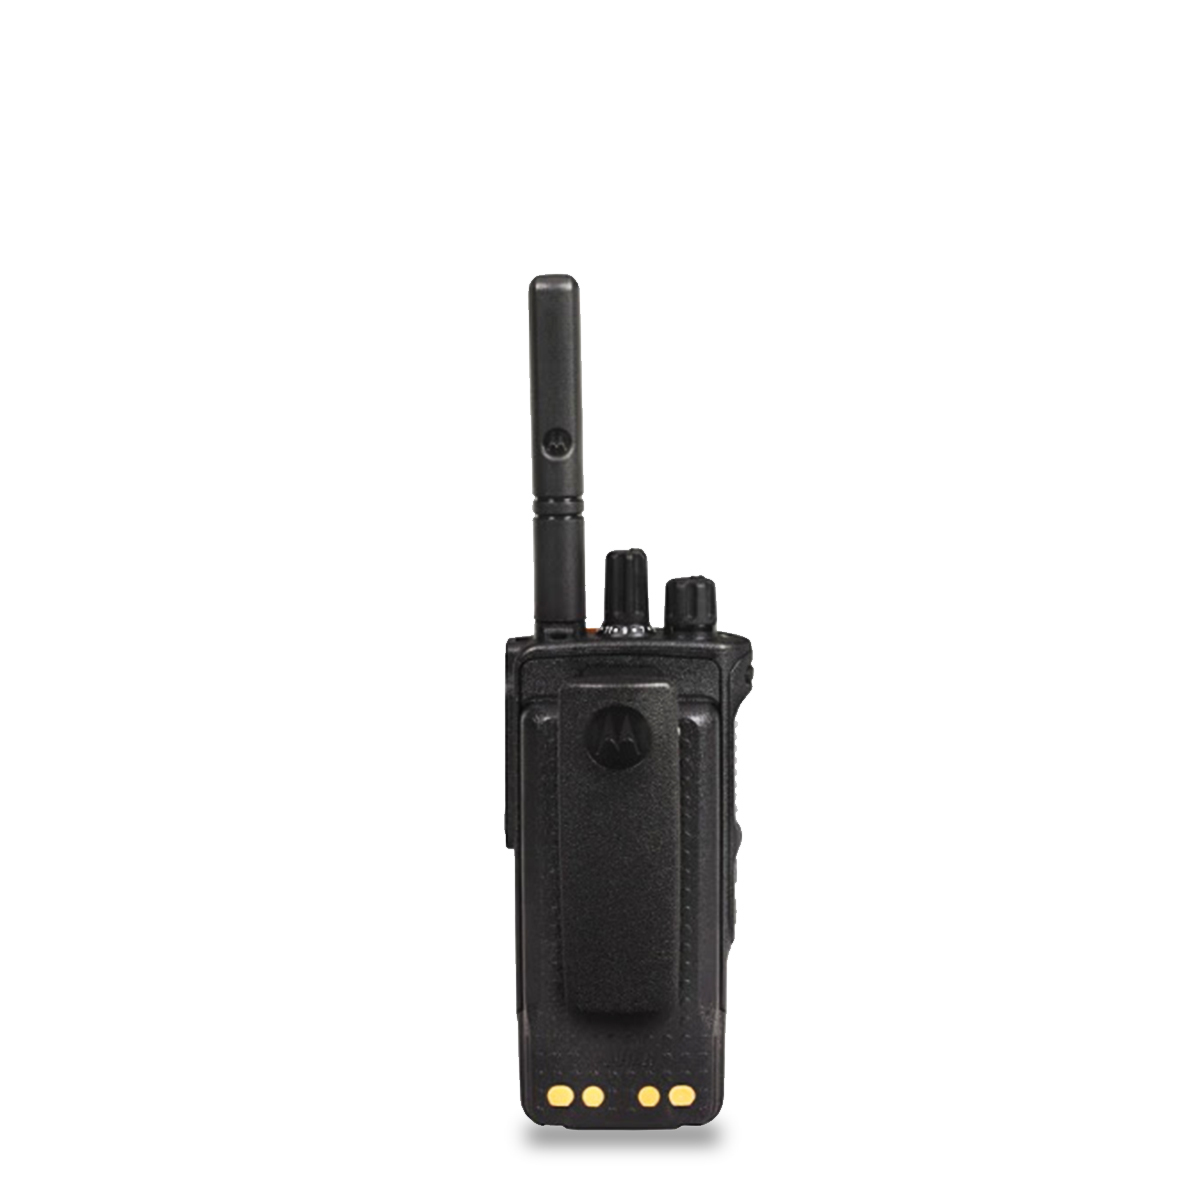 Radio Motorola DGP5050 Digital LAH56JDC9JA1AN VHF 136-174 MHz